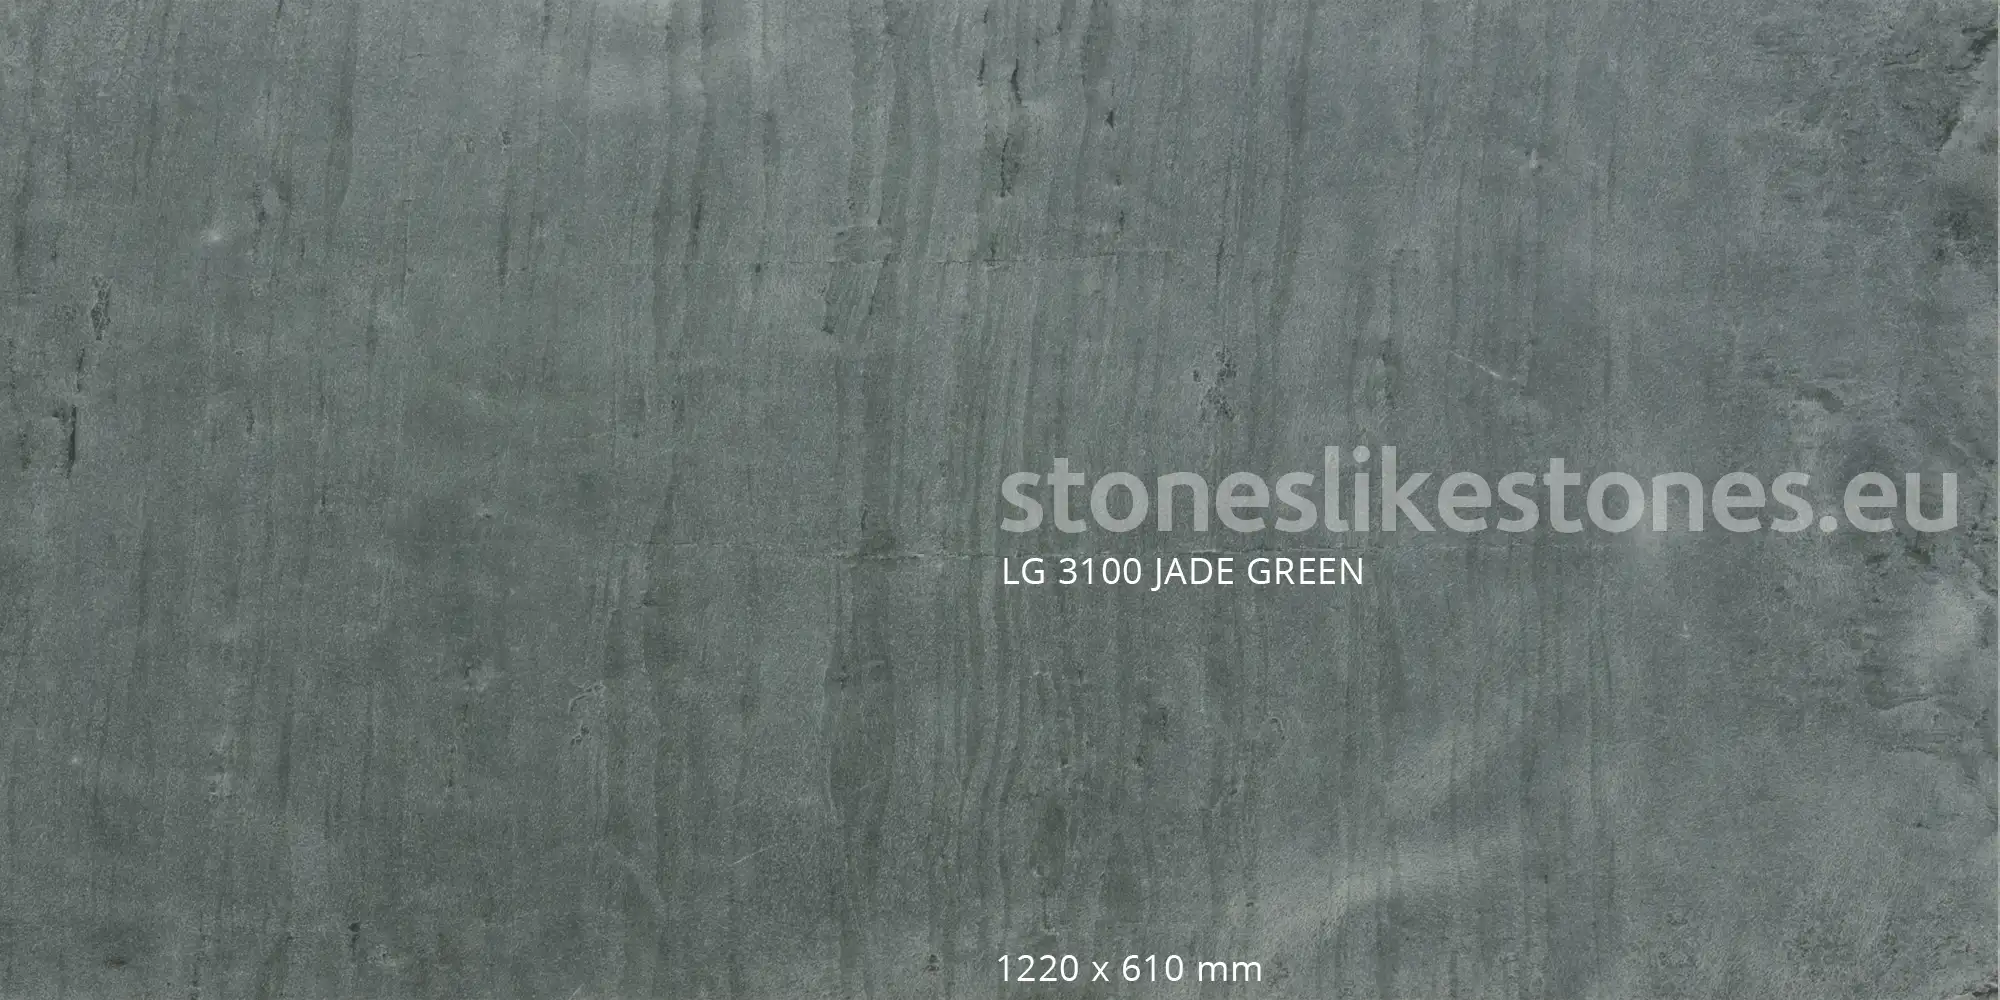 StoneslikeStones Dünnschiefer Steinfurnier LG 3100 Kalkstein JADE GREEN – Download mit Rechtsklick